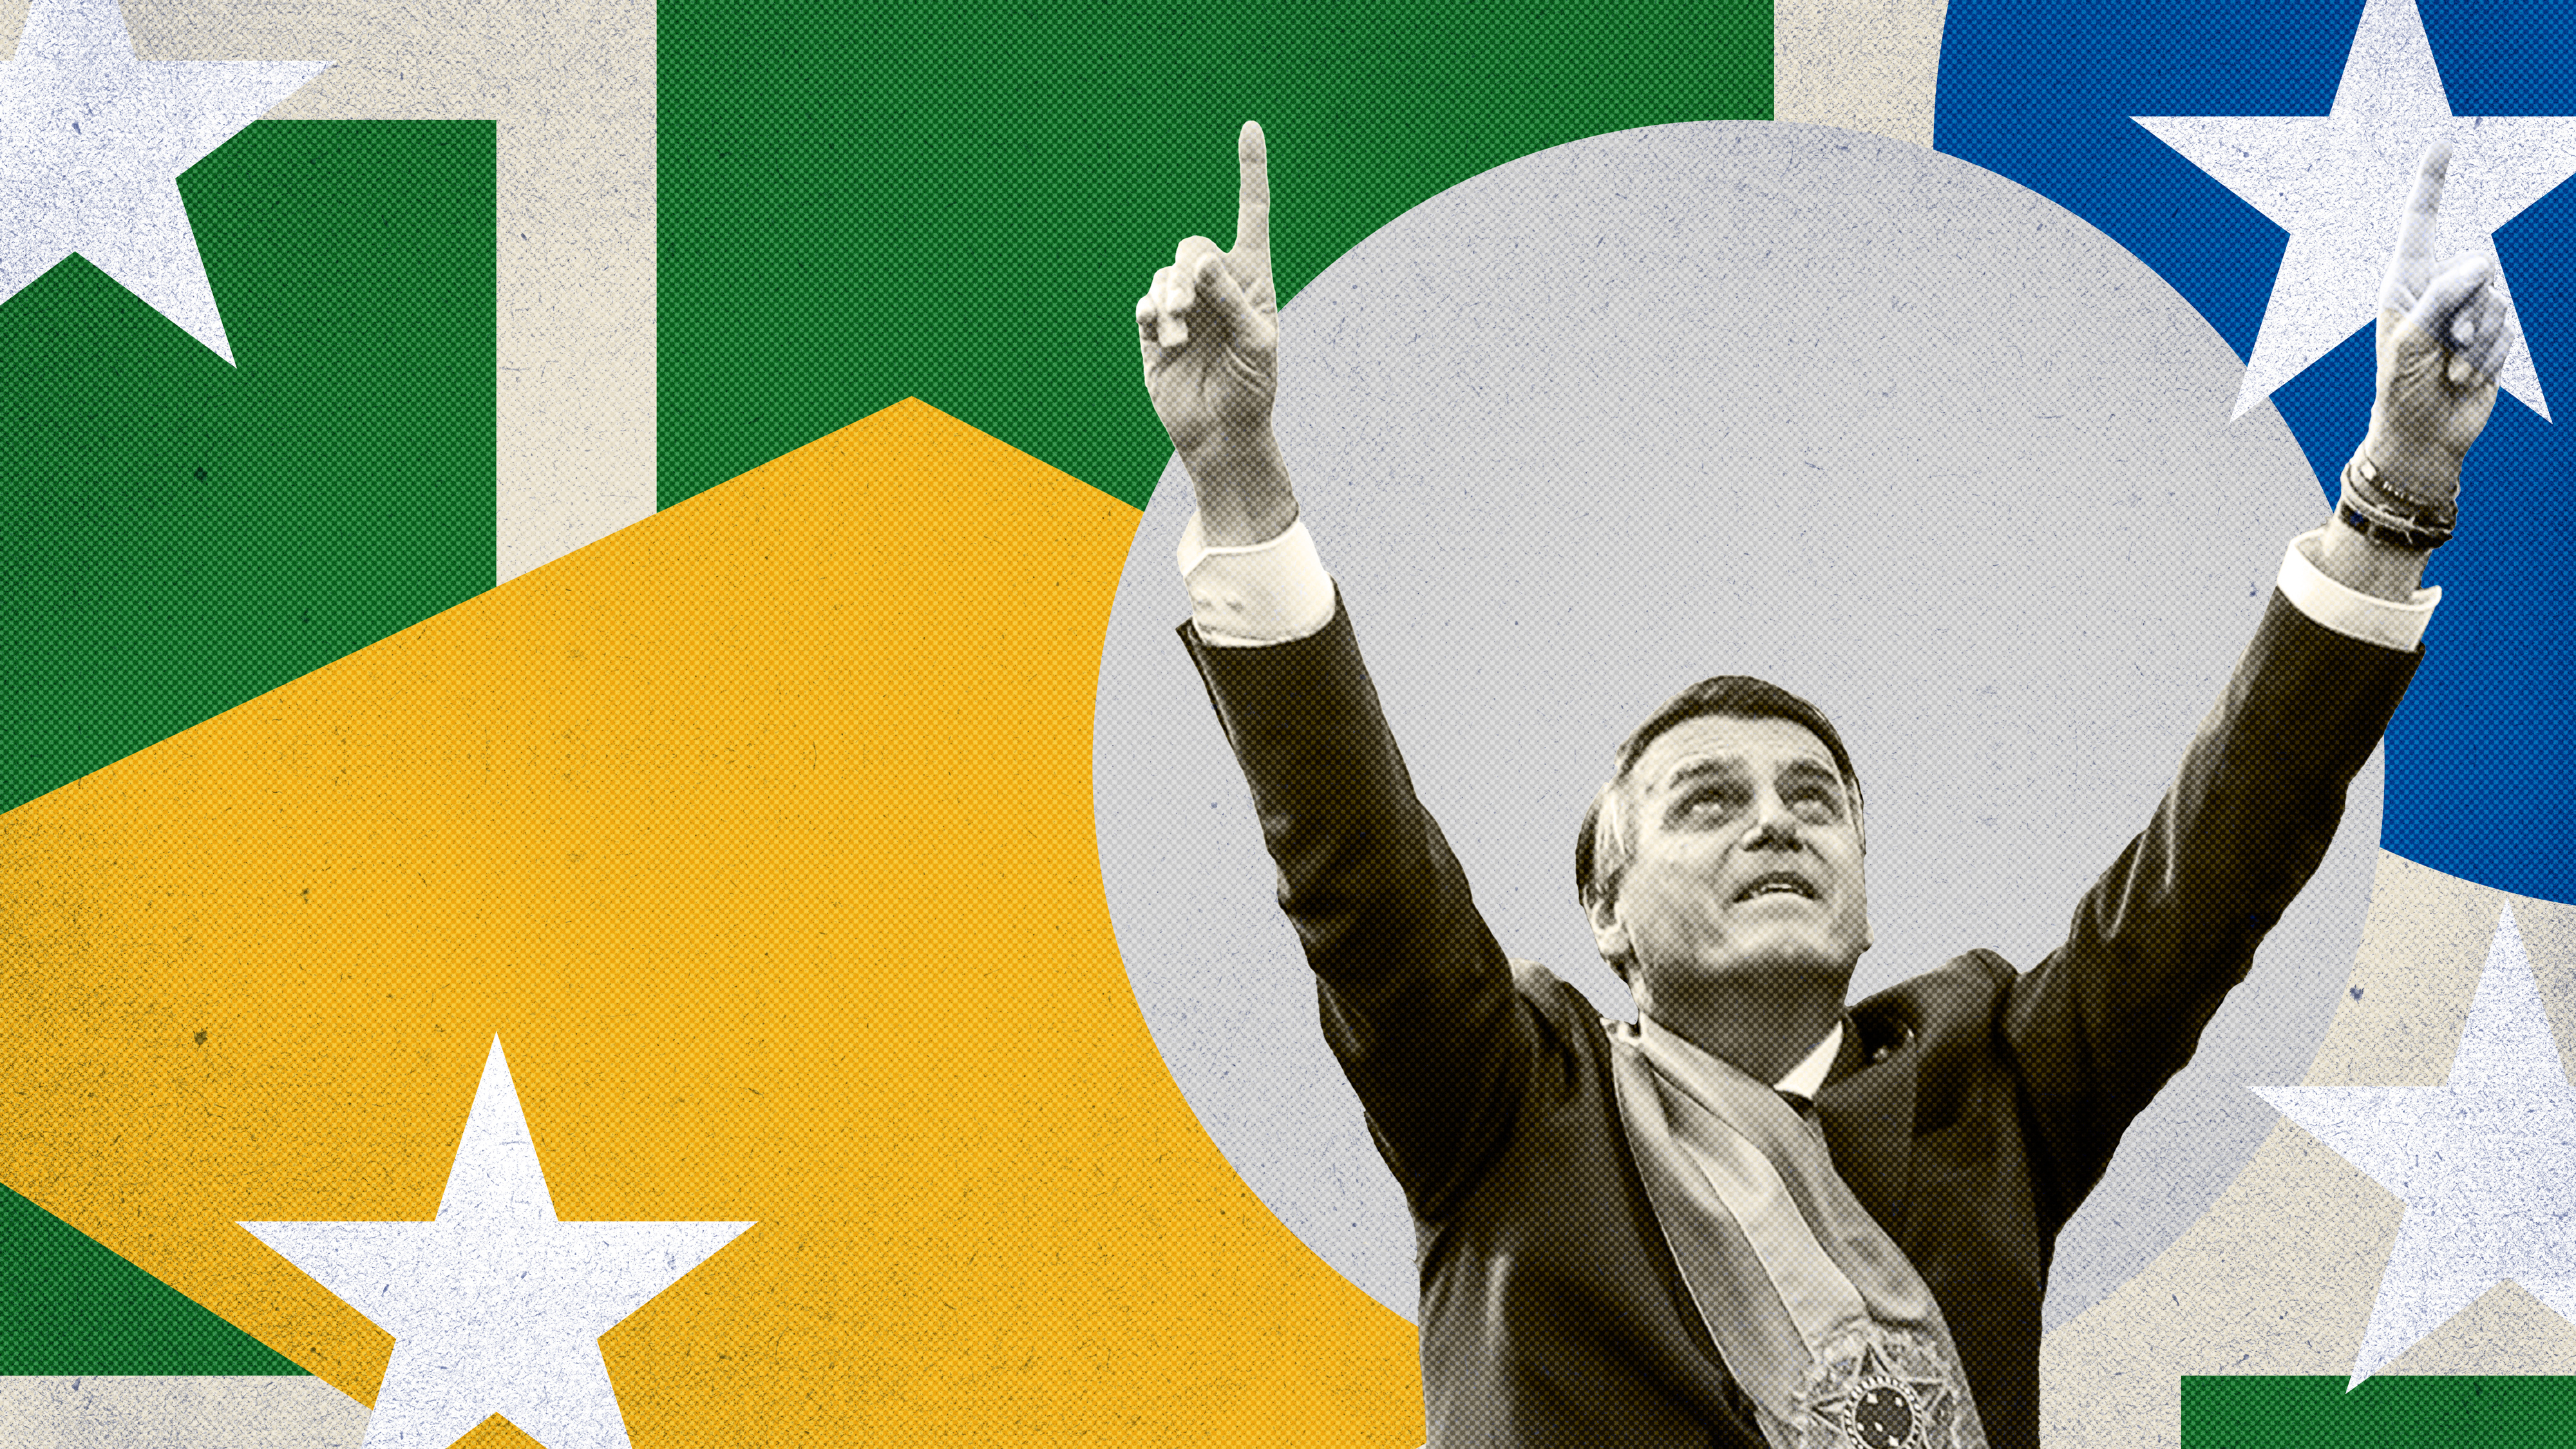 Brazil: Bolsonaro - the lone wolf dreams of glory